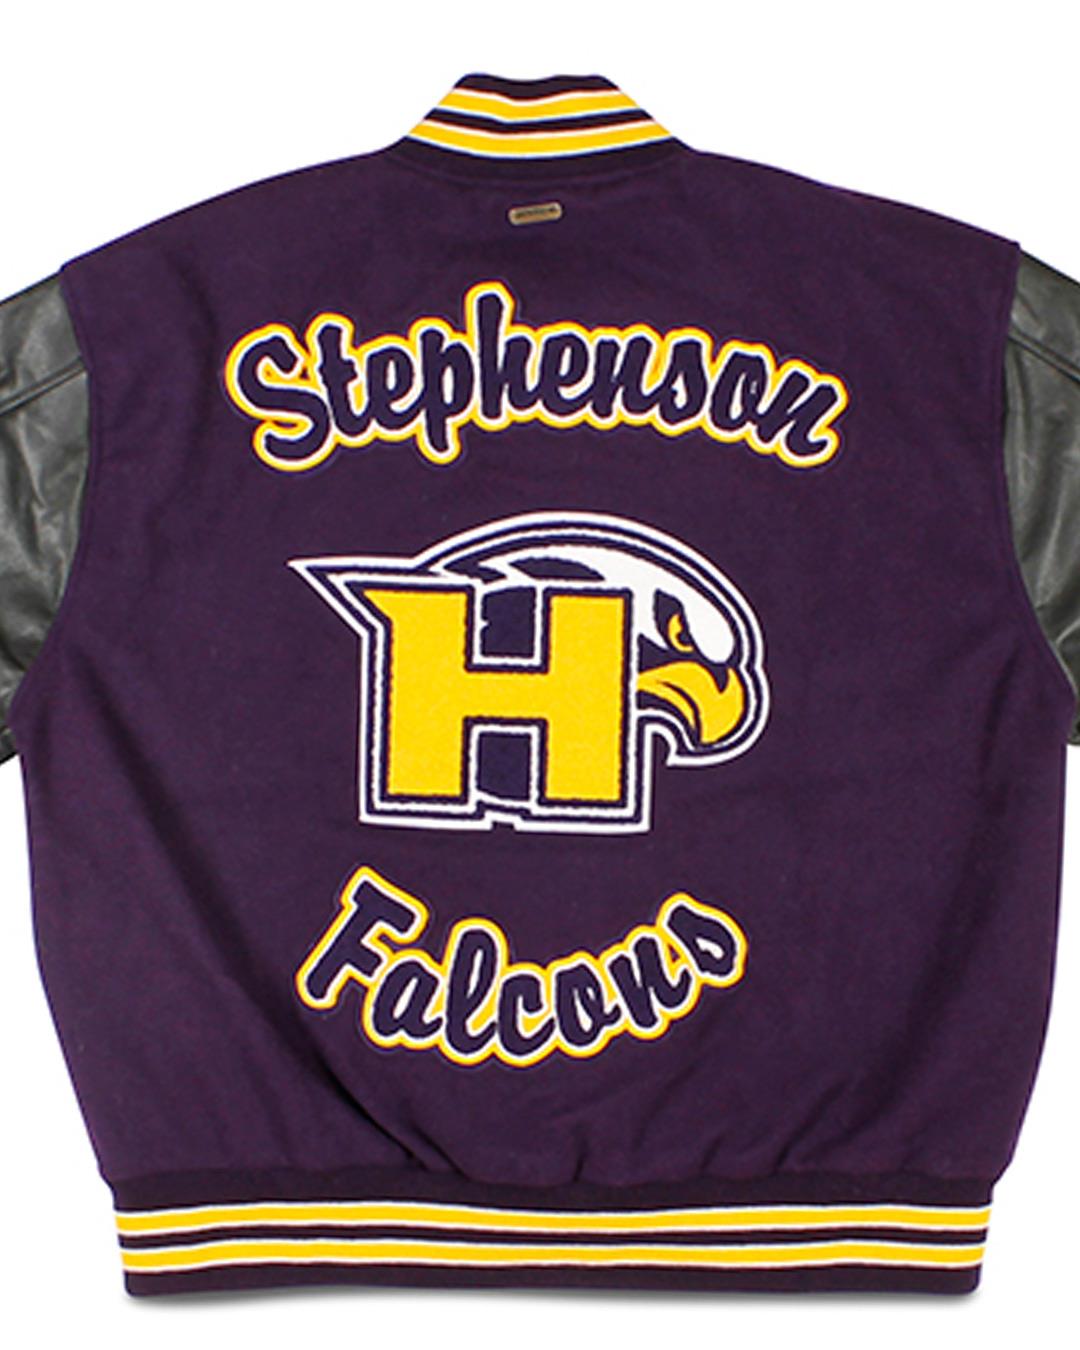 Hanford High School Letterman Jacket, Richland WA - Back